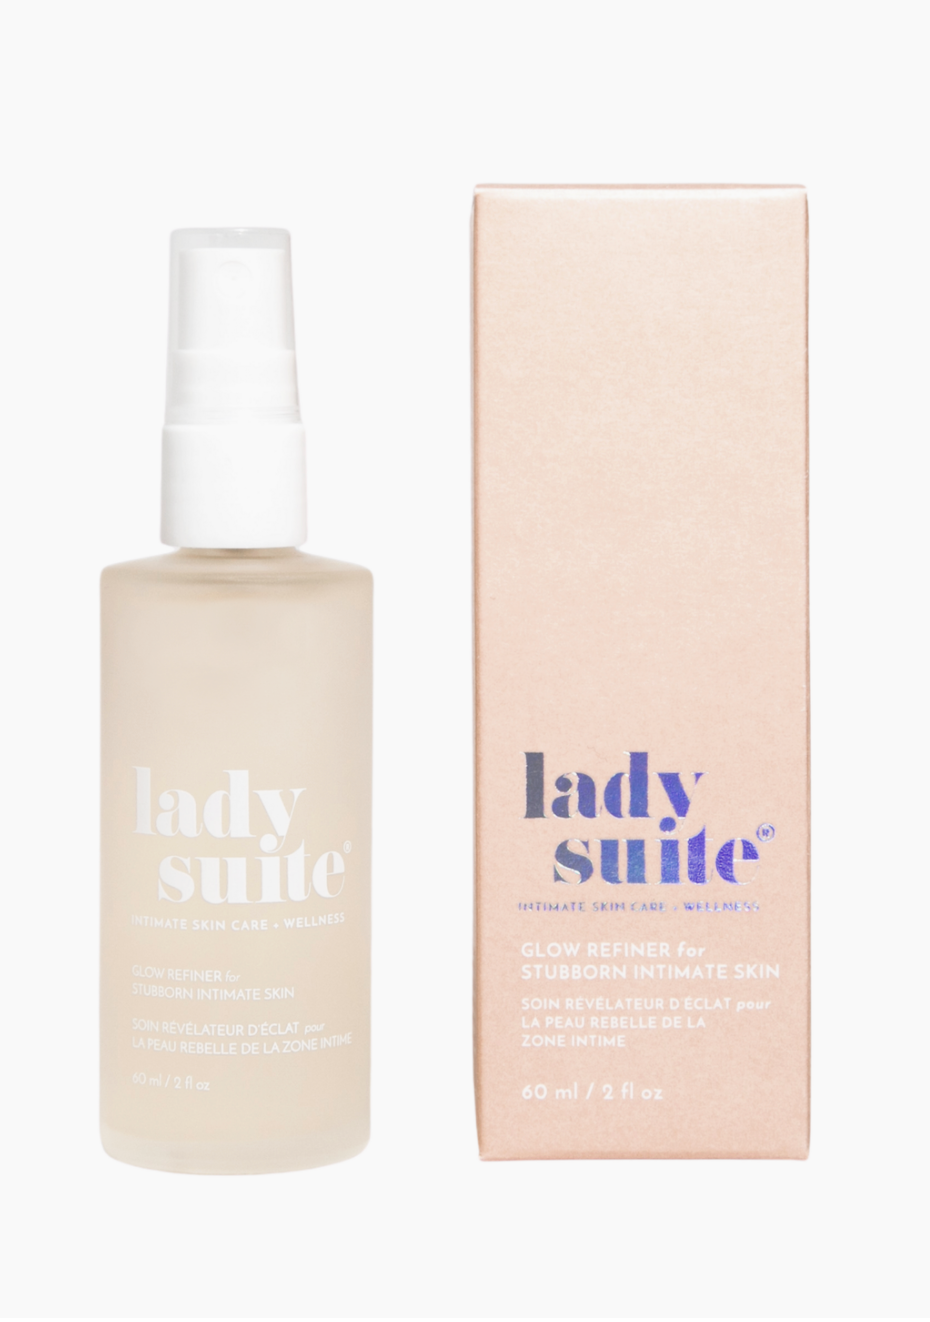 Lady Suite - Glow Refiner Exfoliating Spray for Stubborn Intimate Skin